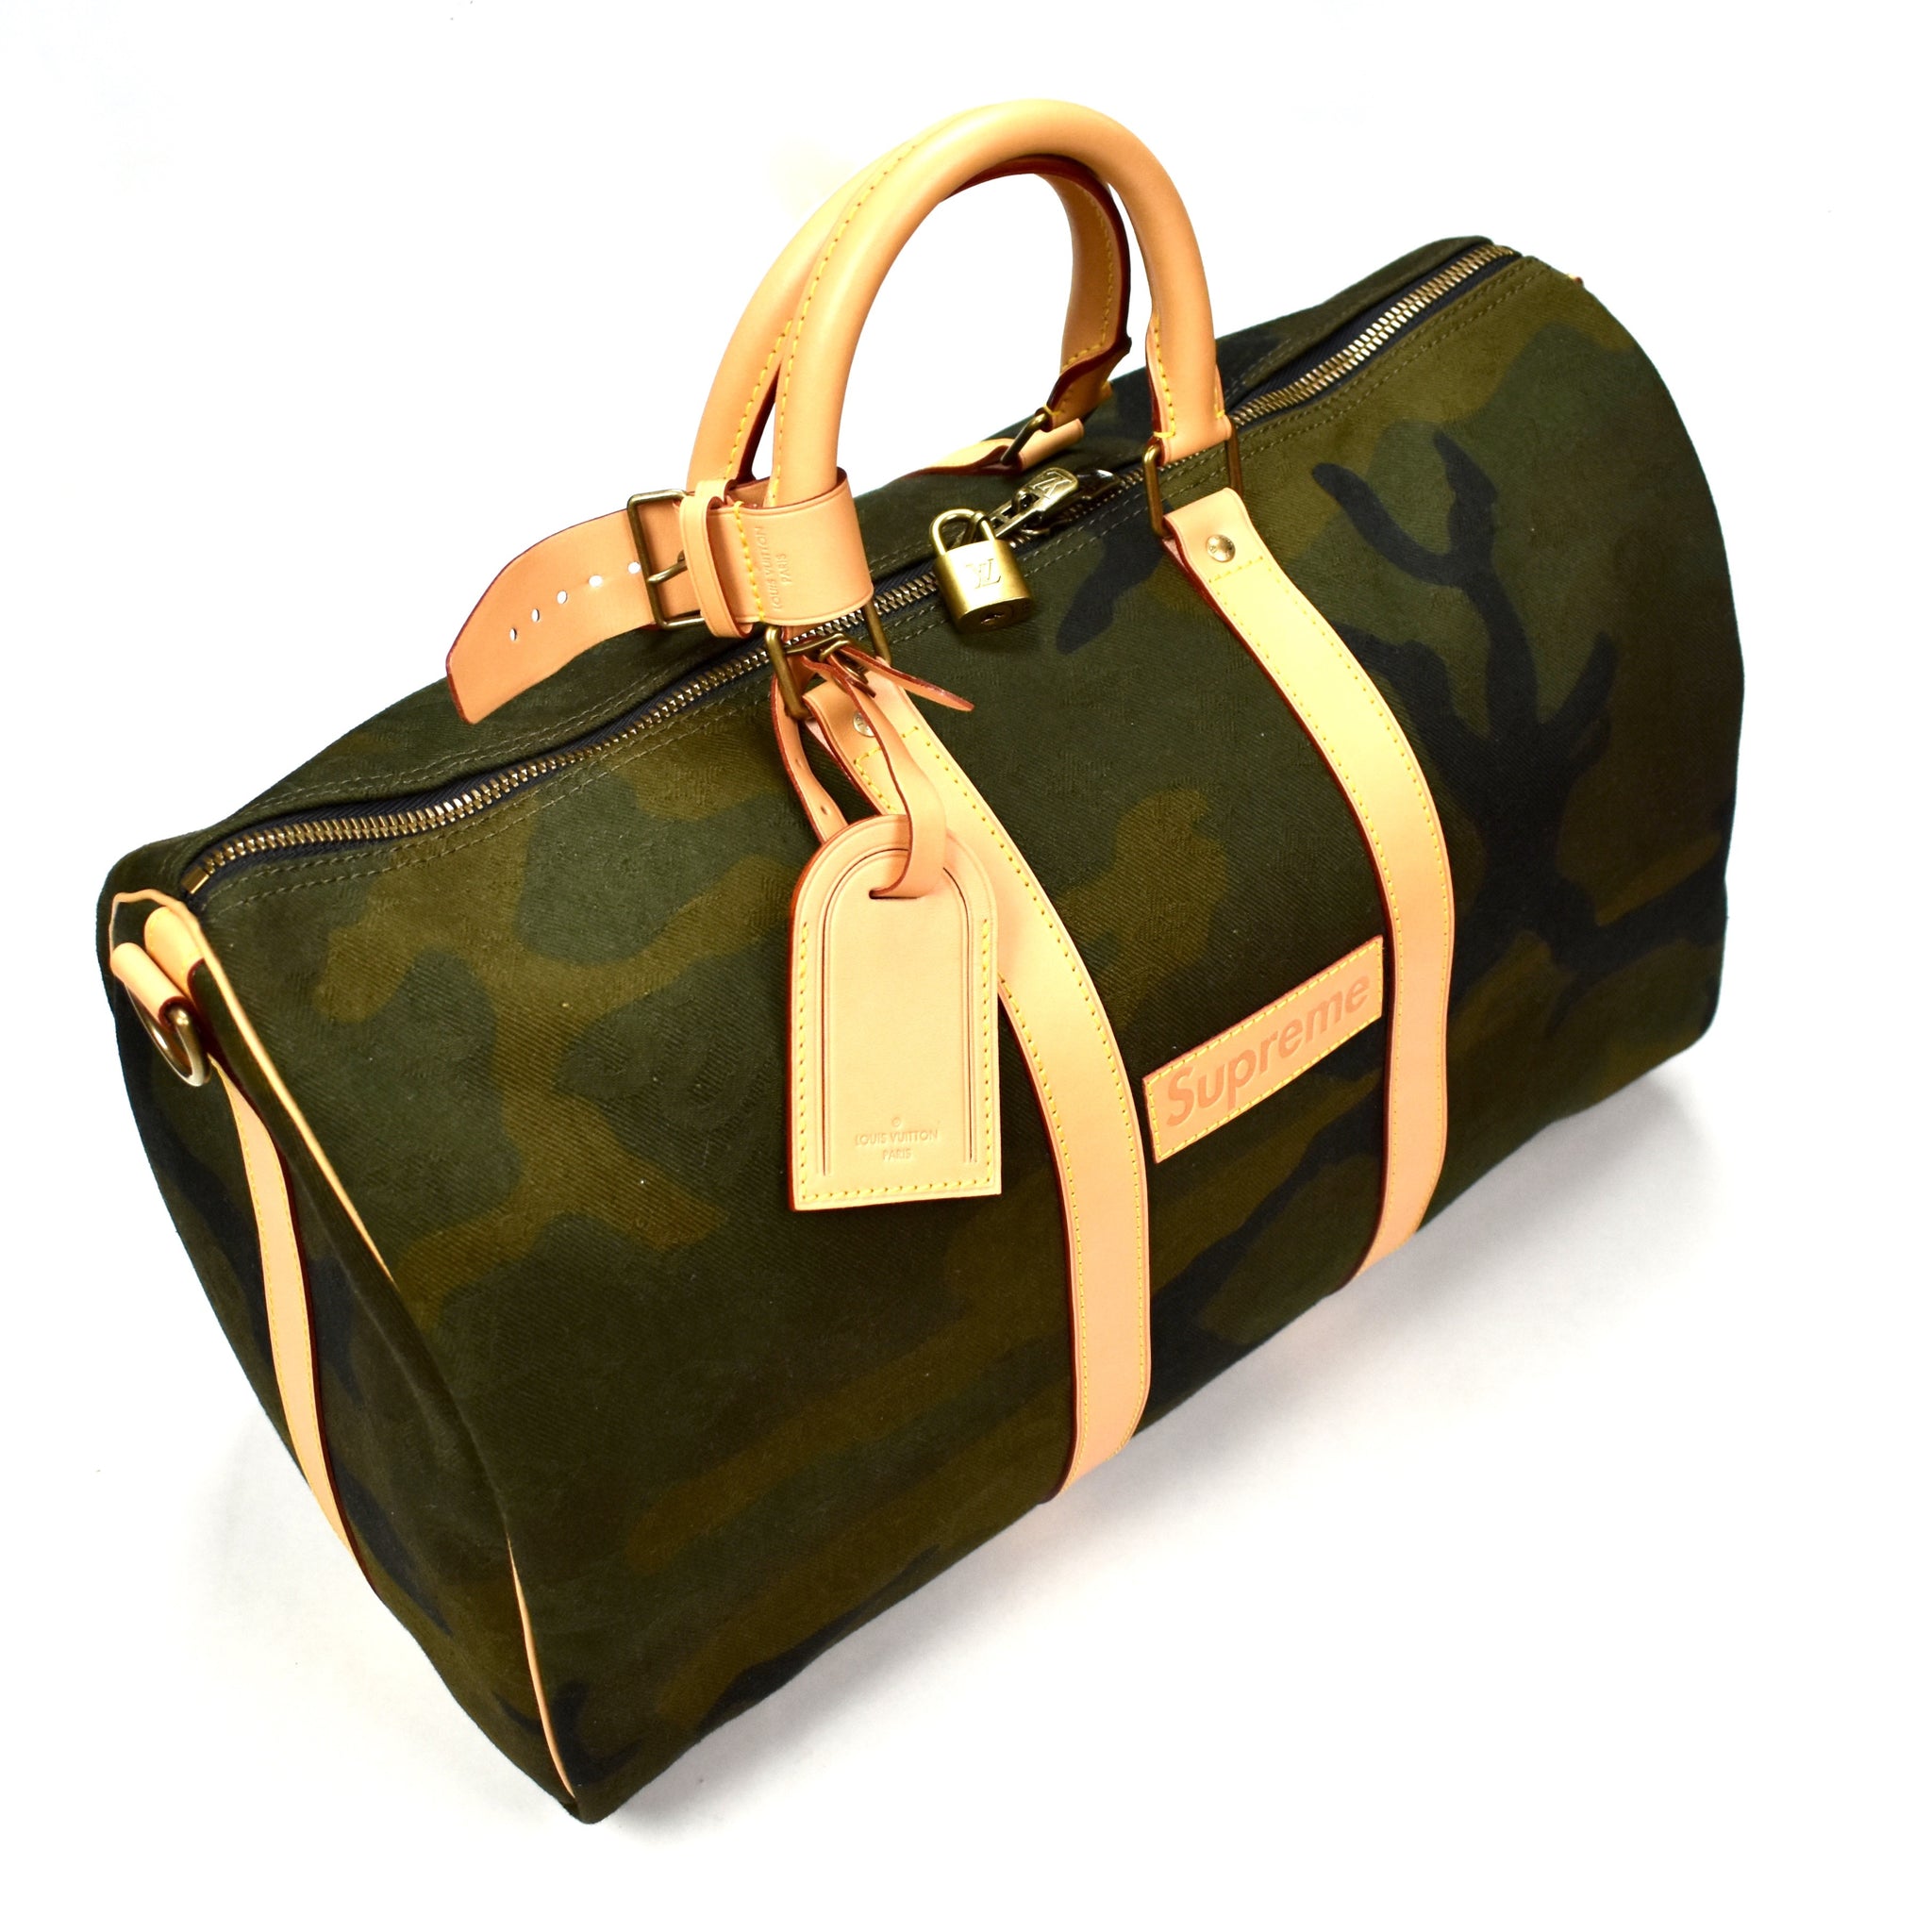 Supreme Louis Vuitton Camo Duffle Bag - Just Me and Supreme